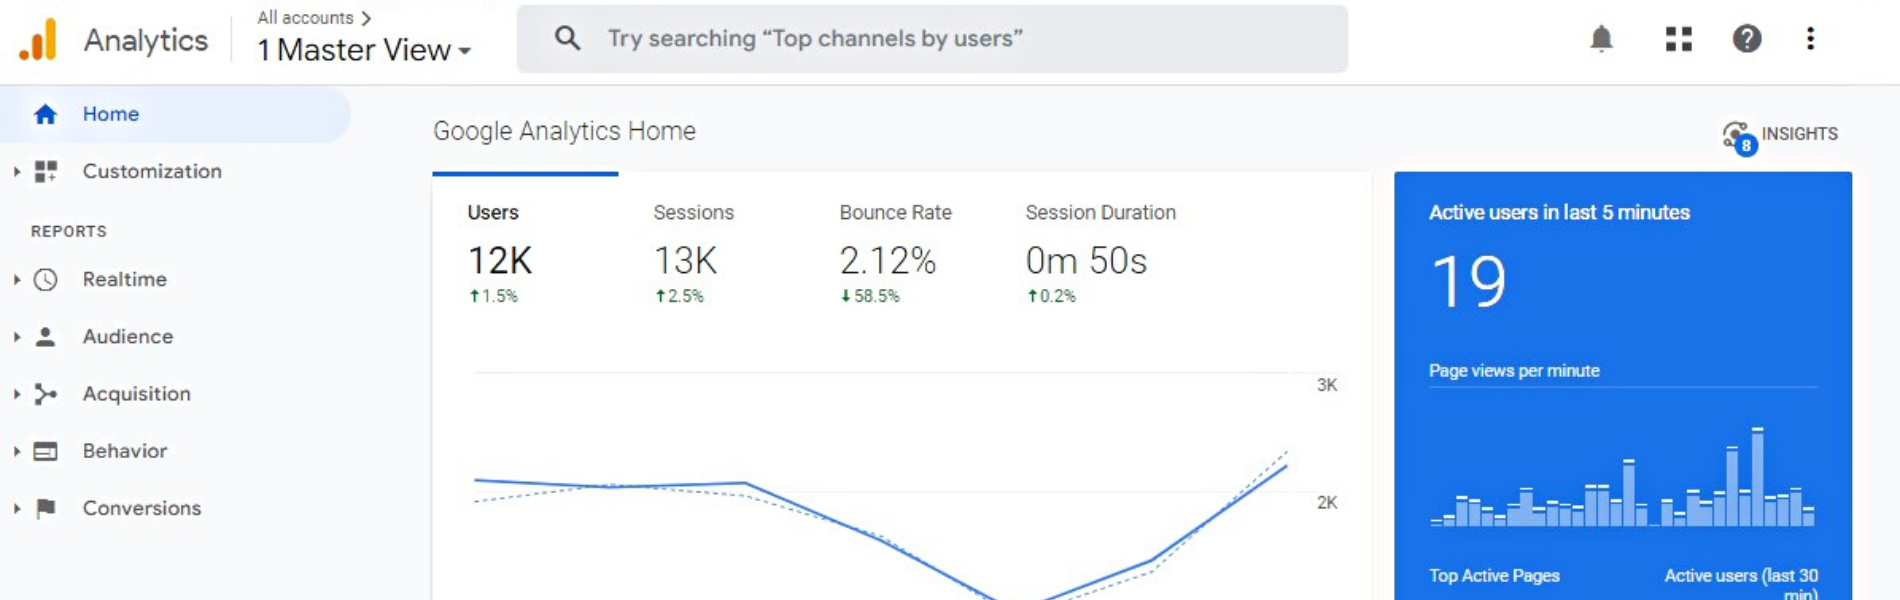 screenshot of google analytics platform